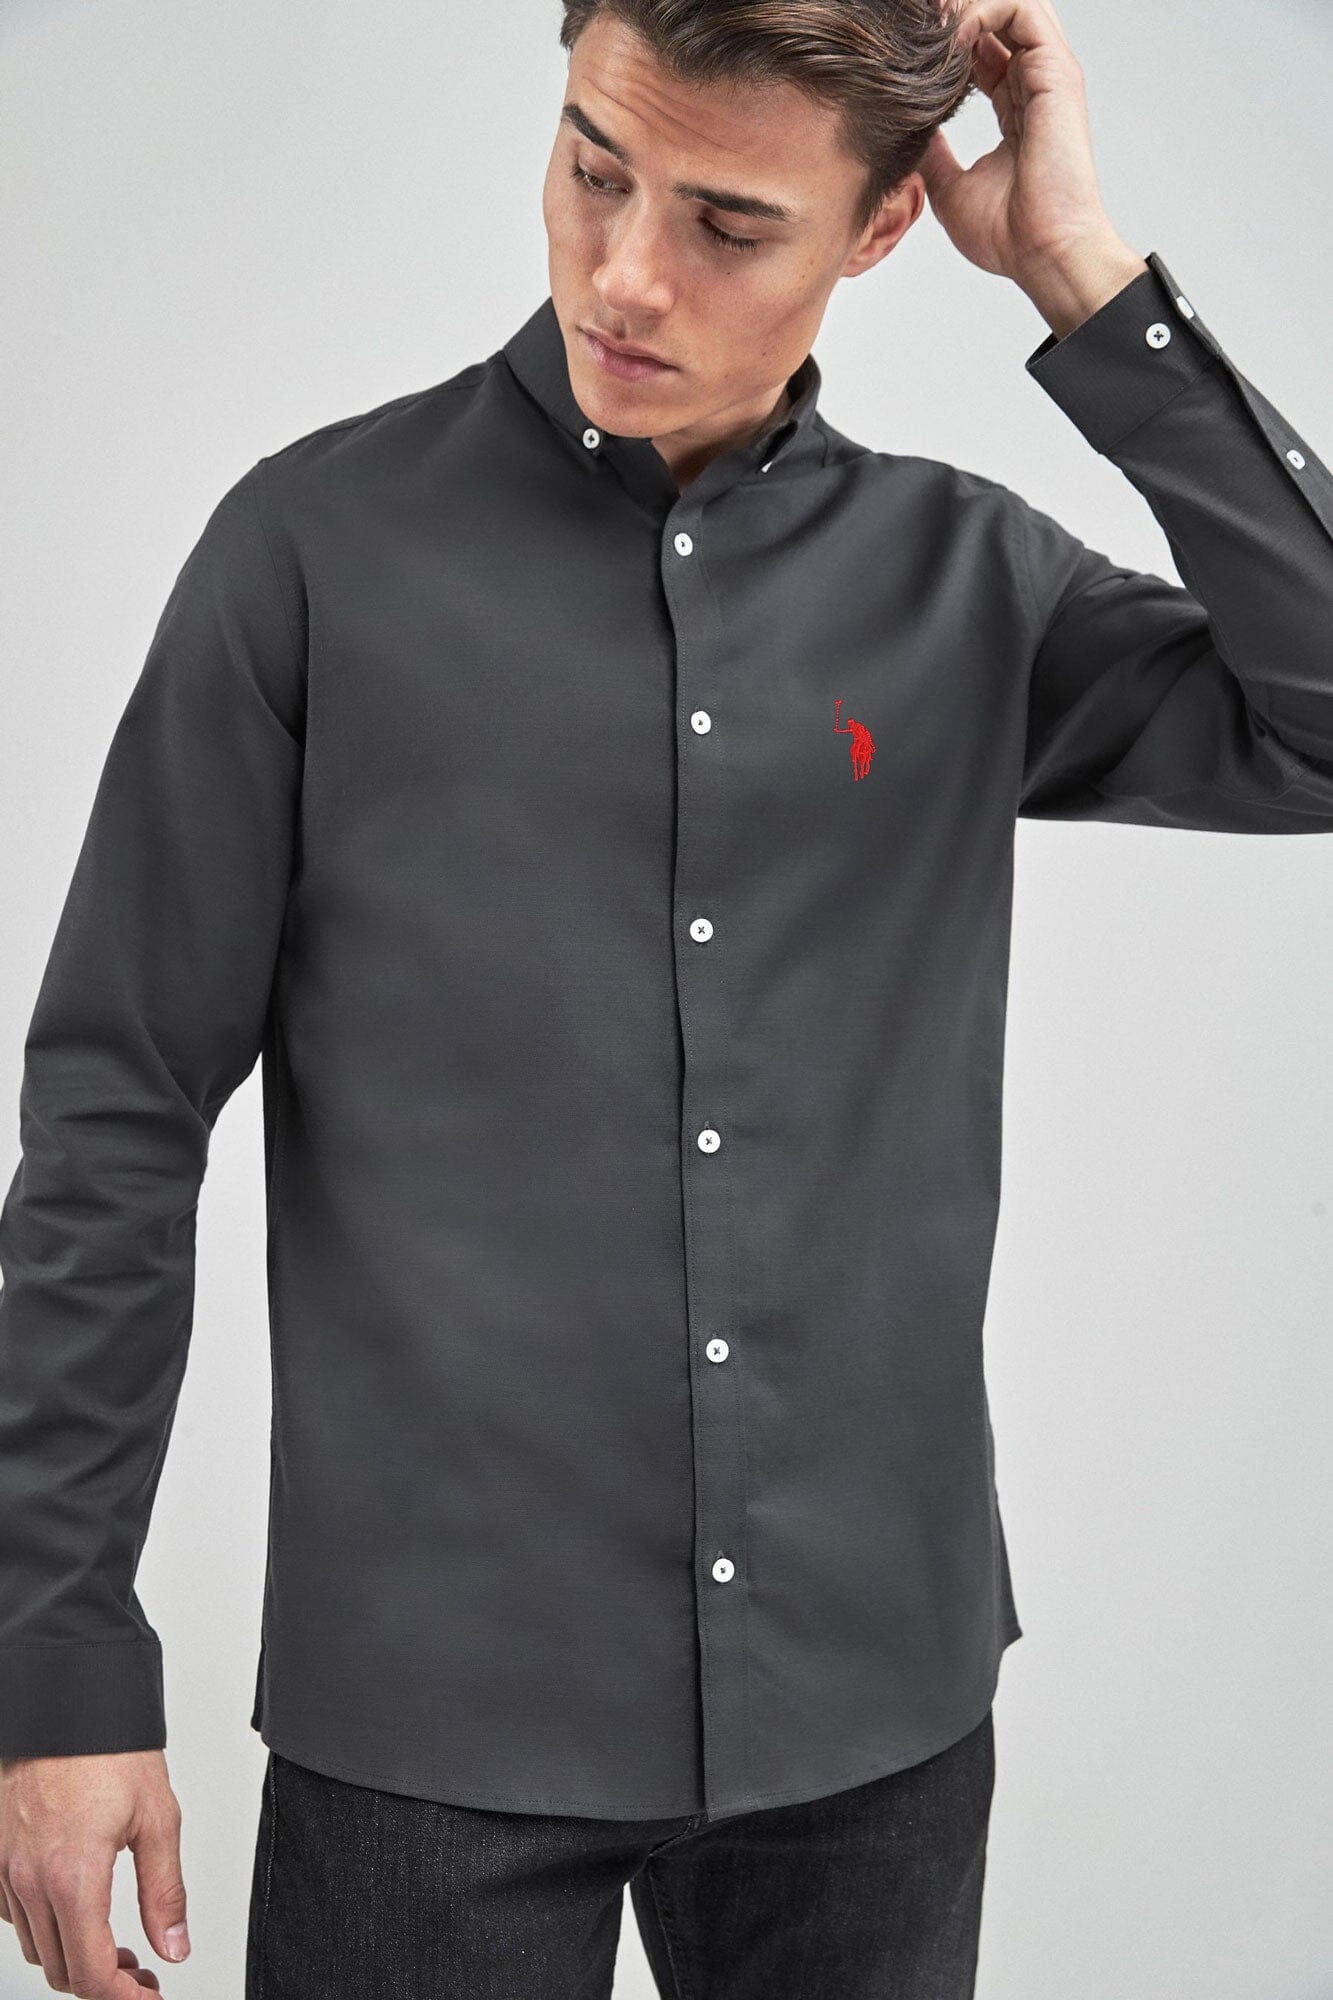 Polo Republica Men's Signature Pony Embroidered Solid Casual Shirt Men's Casual Shirt Polo Republica Dark Grey S 